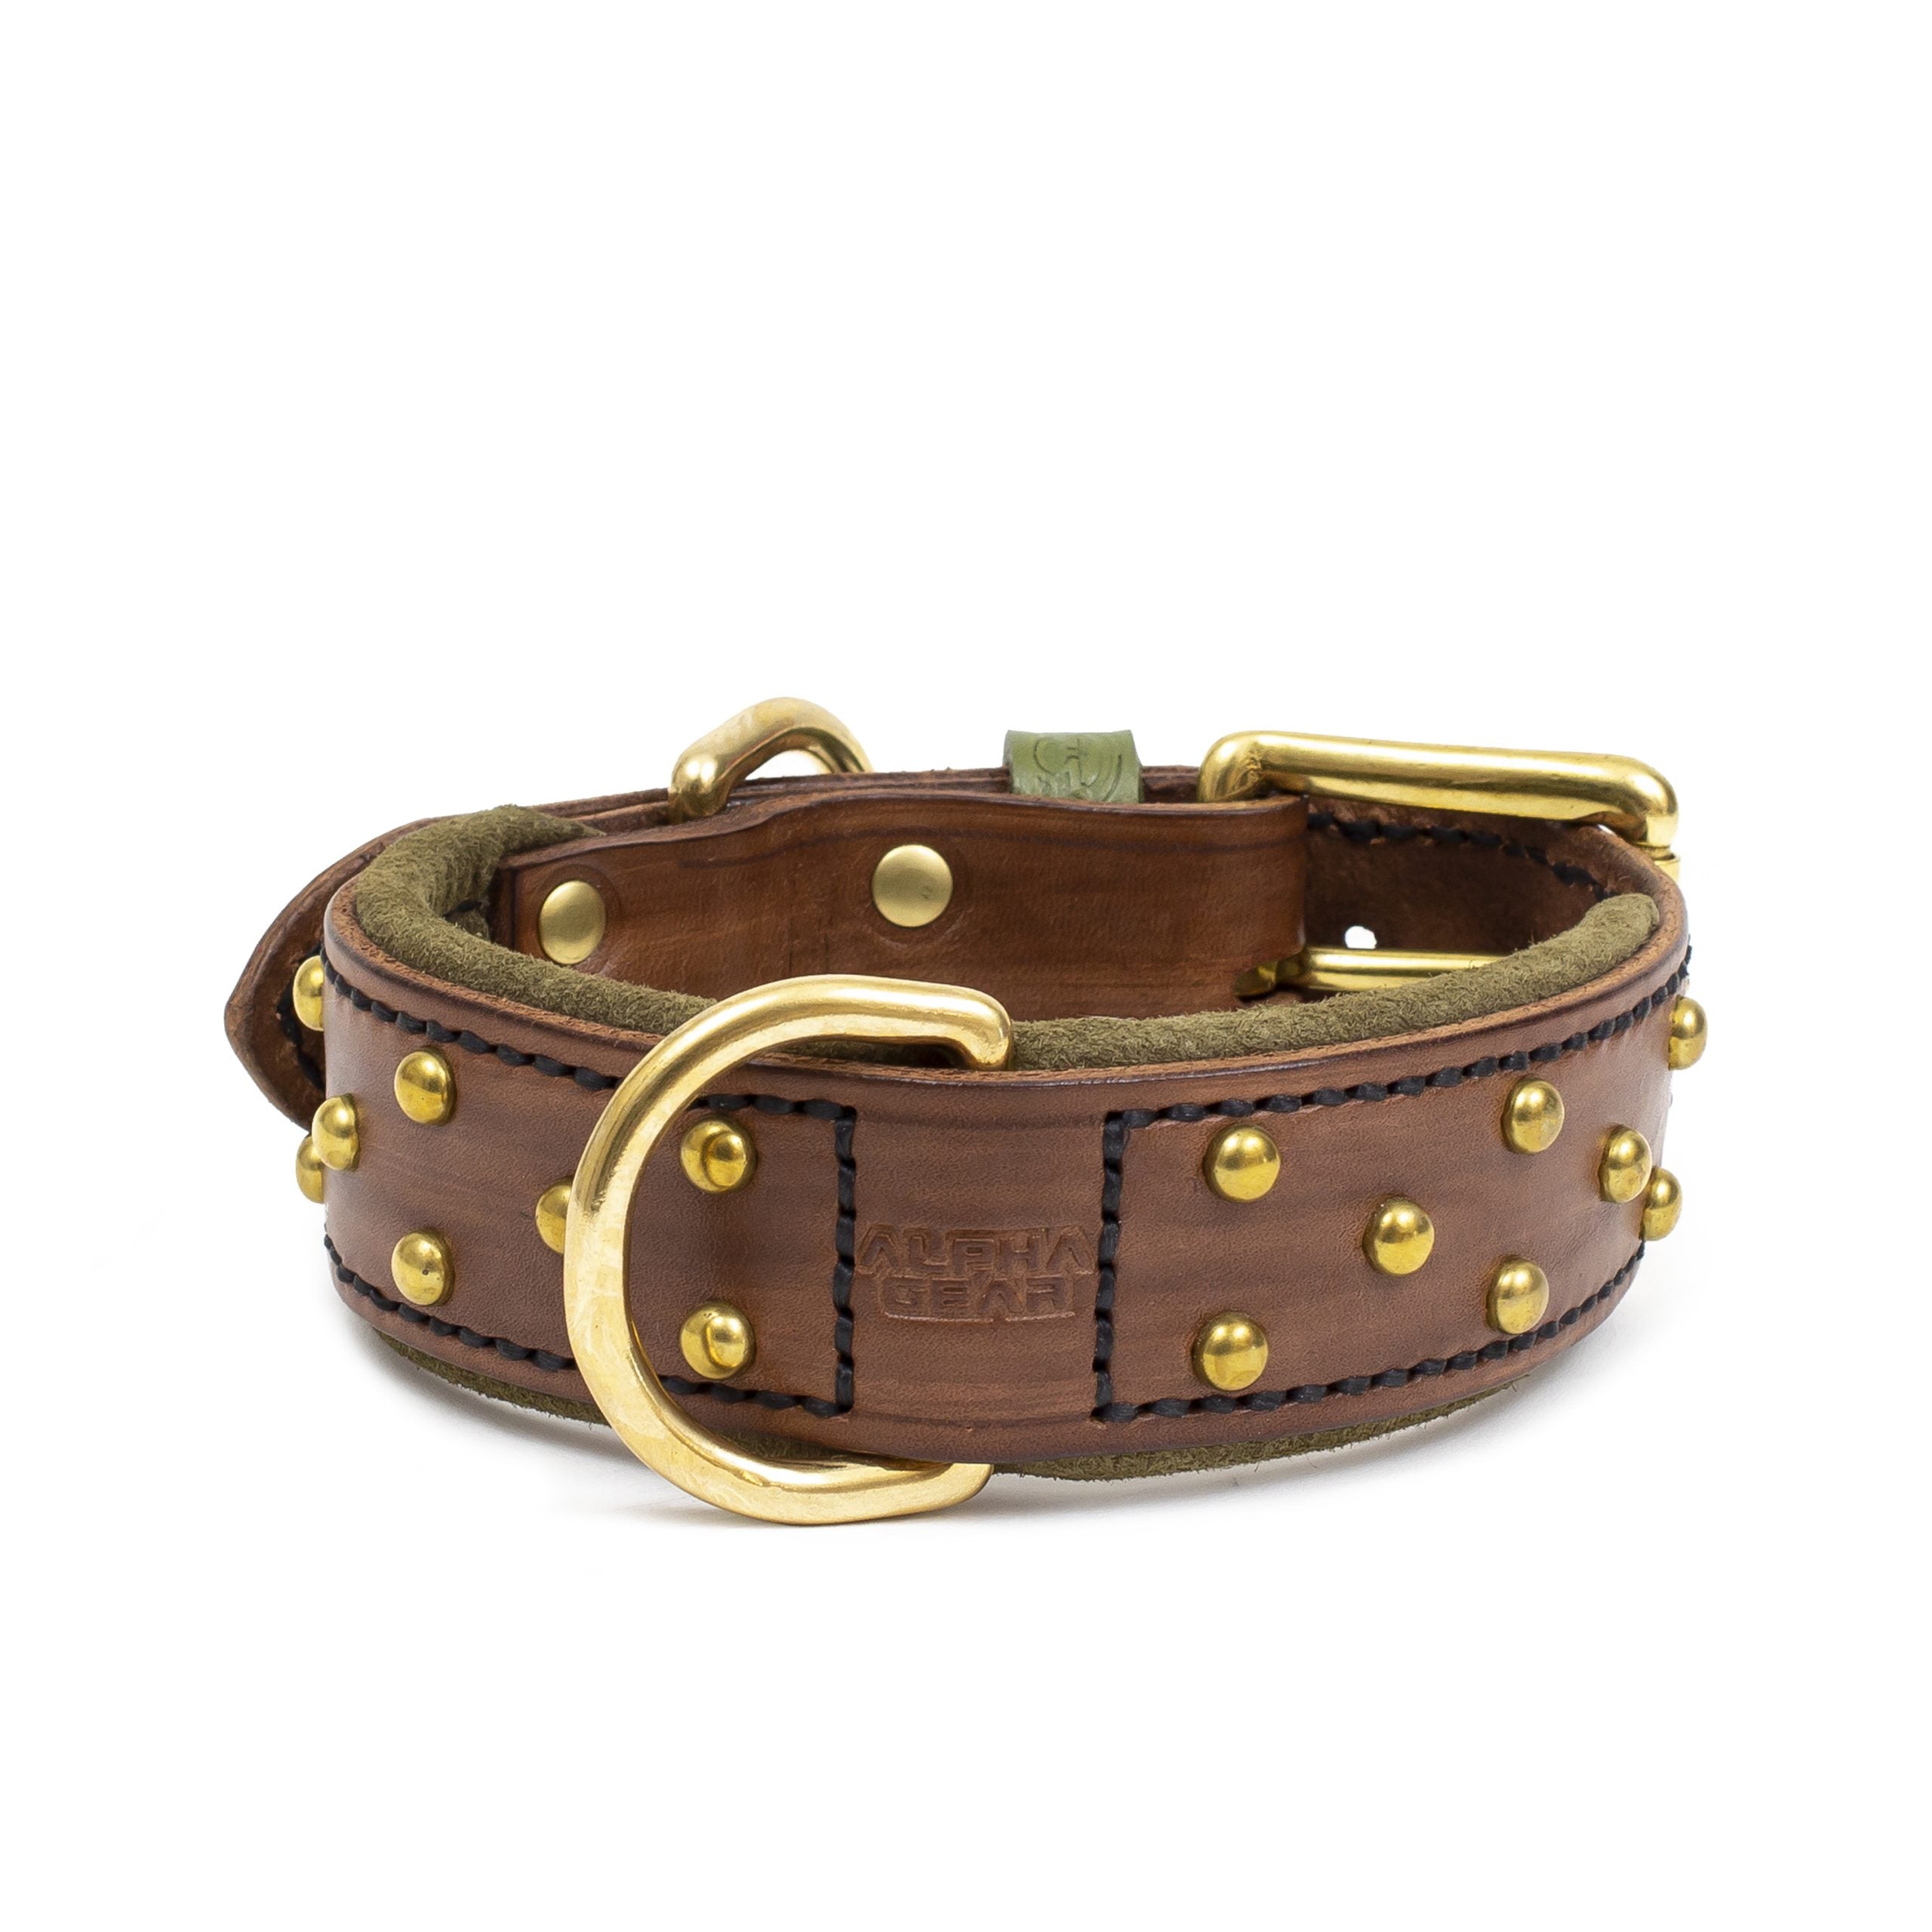 Leather Dog Collar (Adams Leather) - Brown